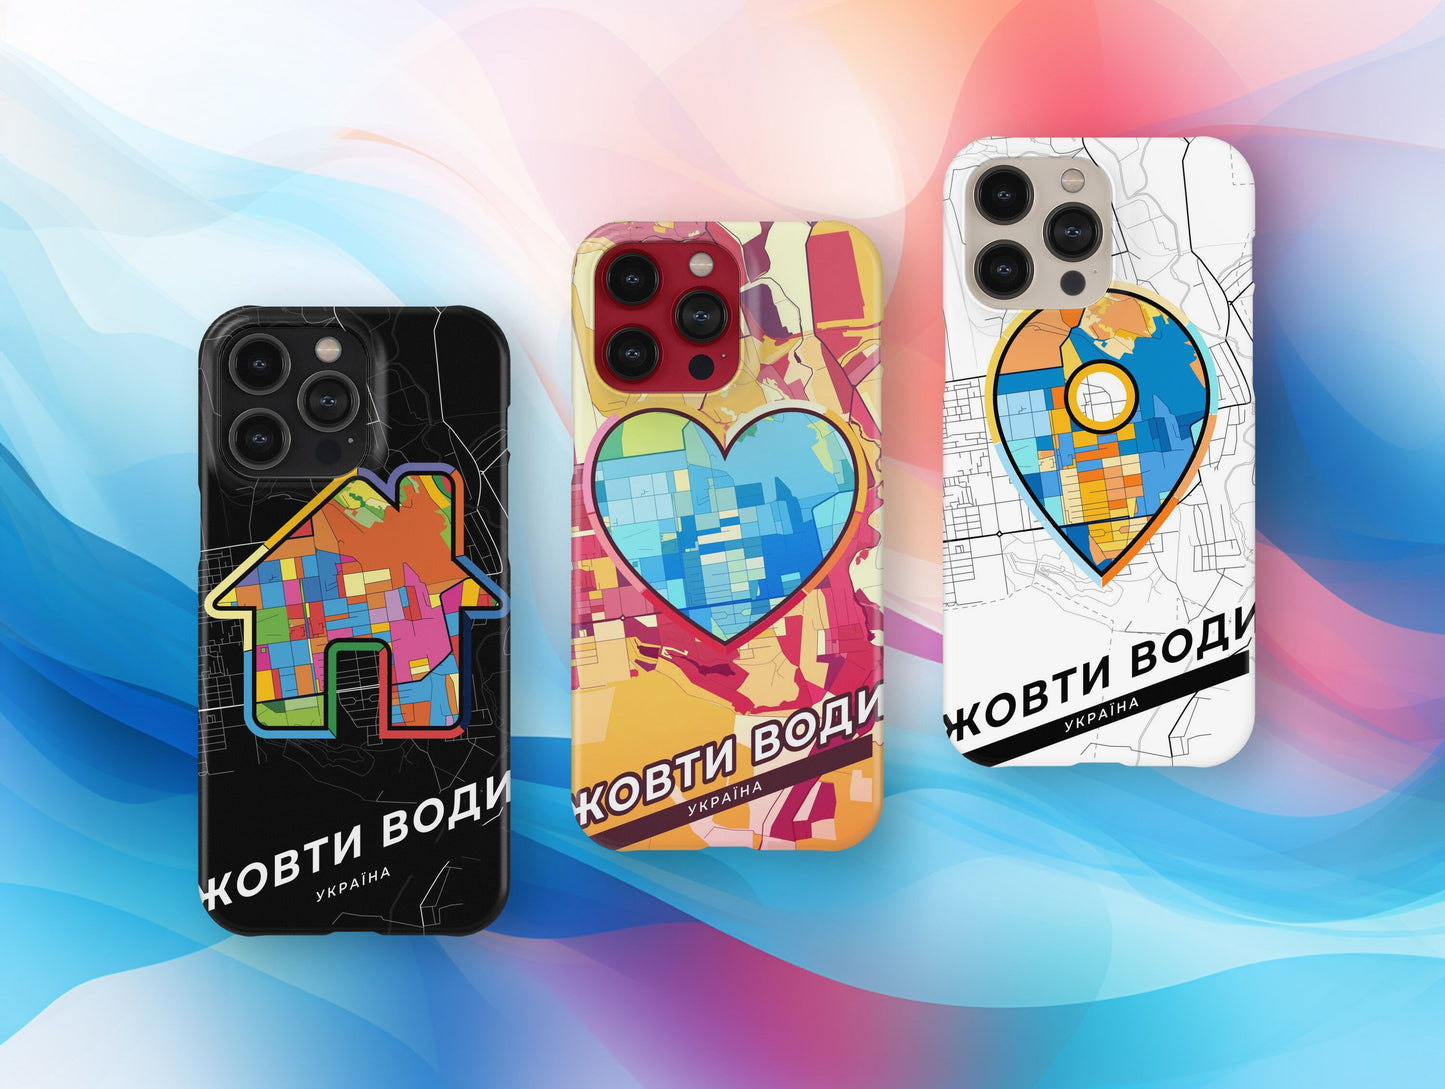 Zhovti Vody Ukraine slim phone case with colorful icon